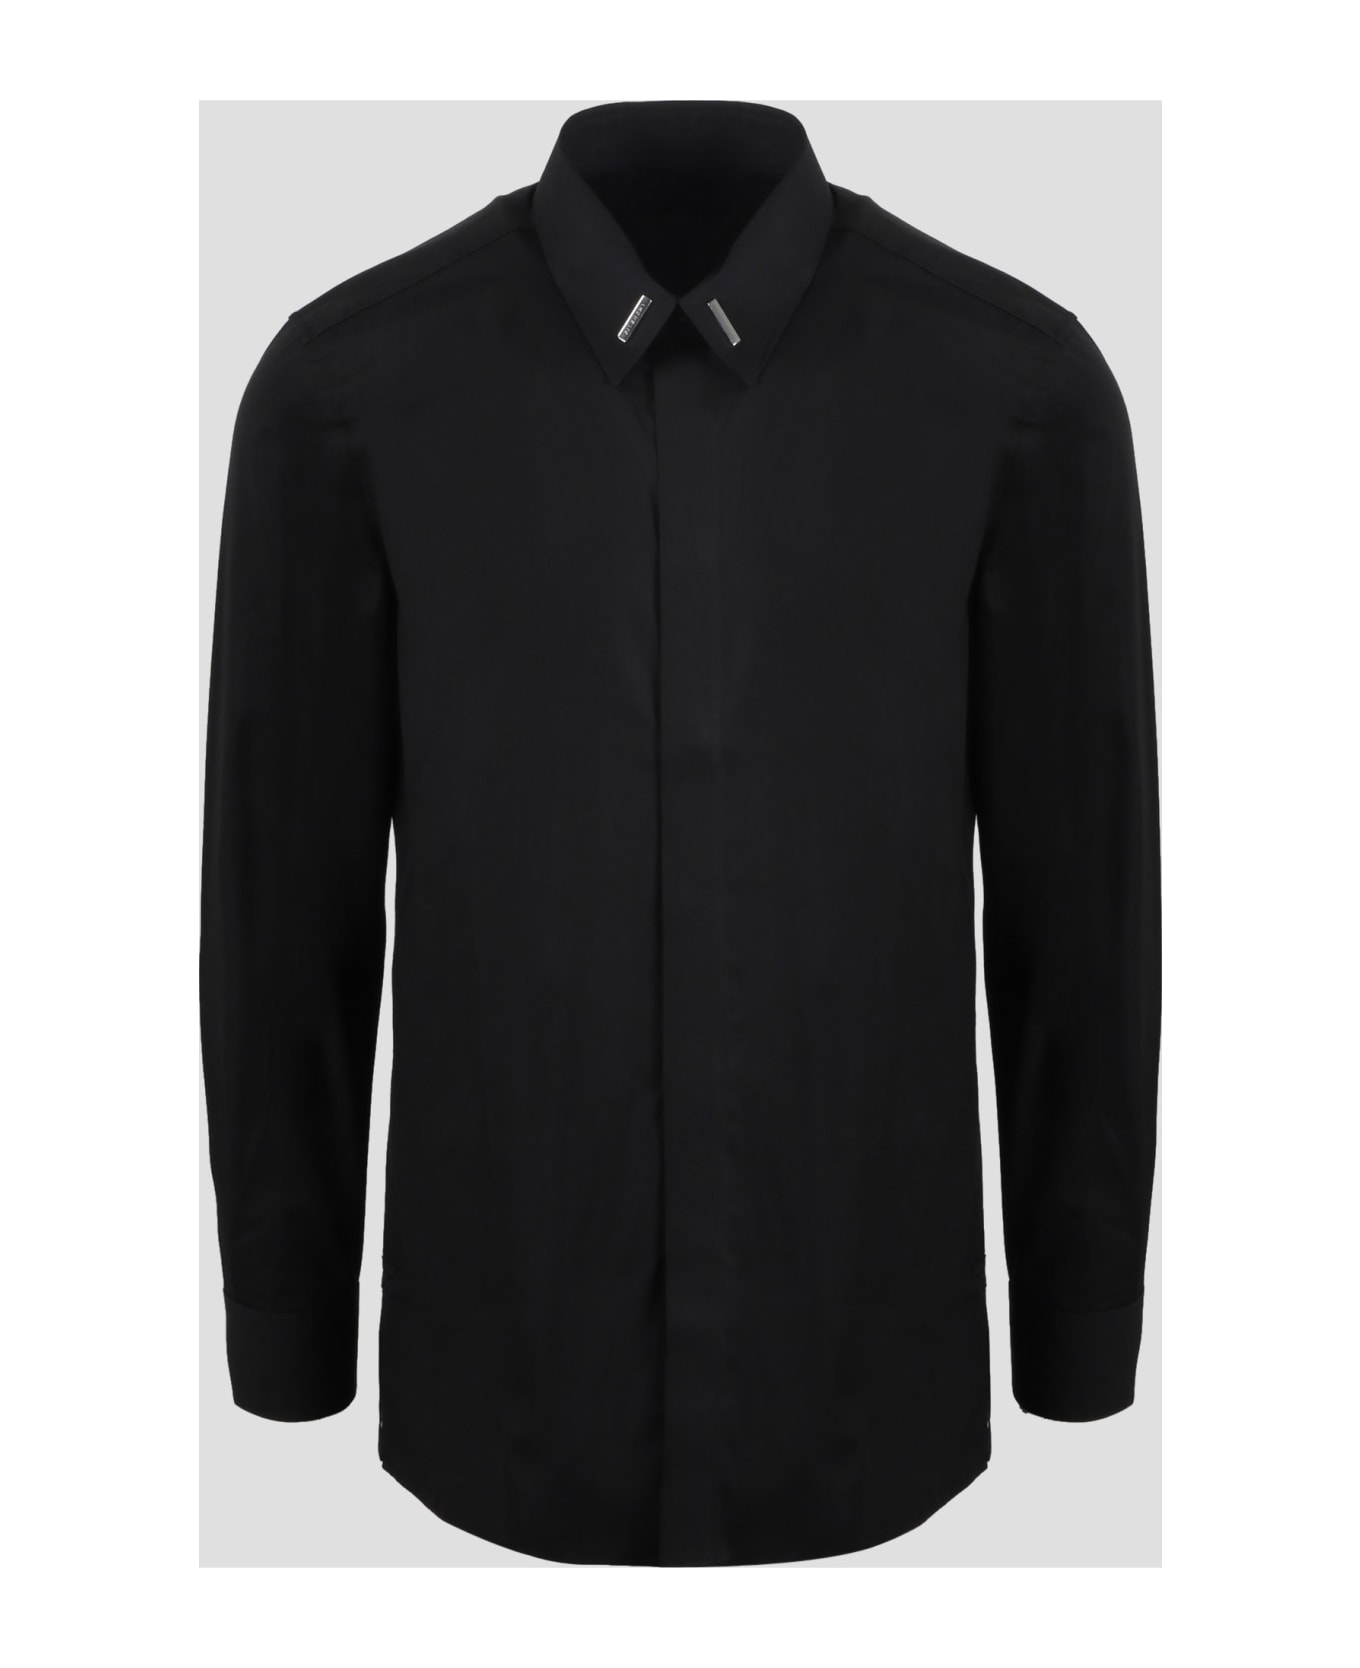 Givenchy Poplin Shirt - Black